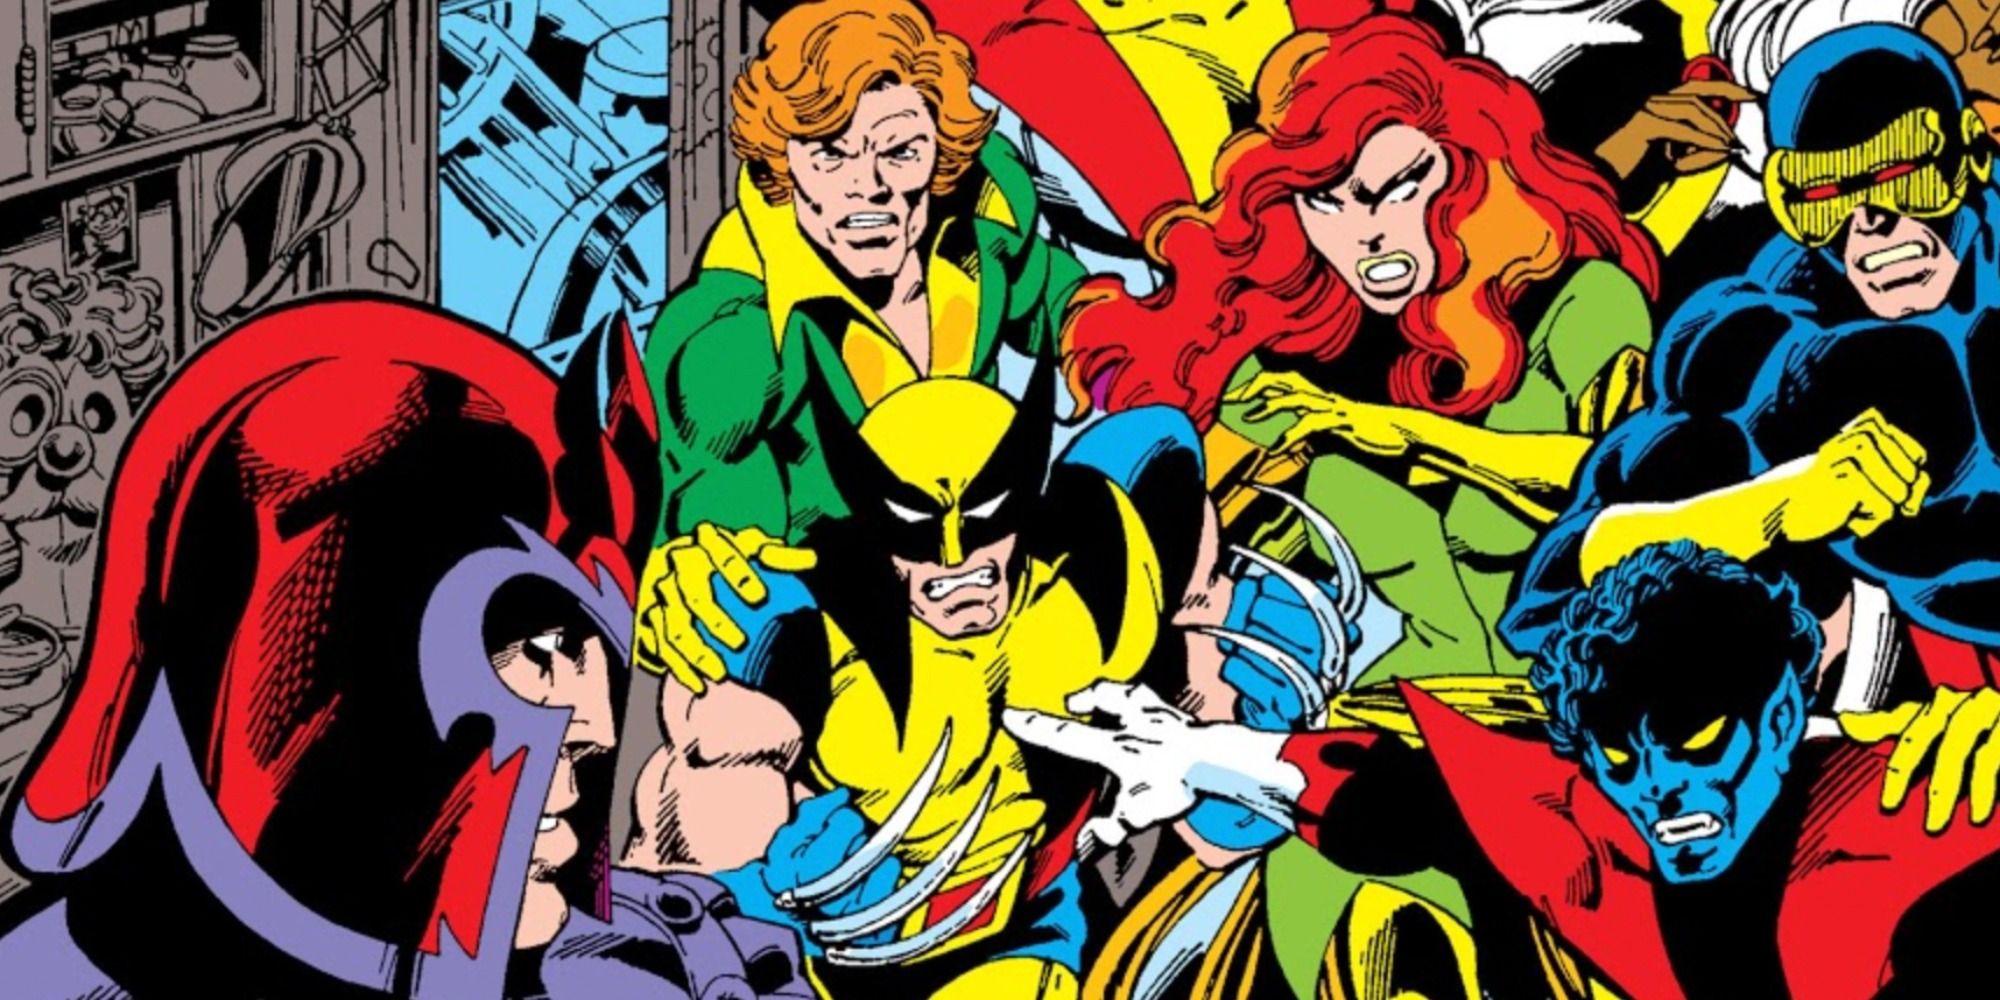 Magneto confronts the X-Men in Marvel Comics.